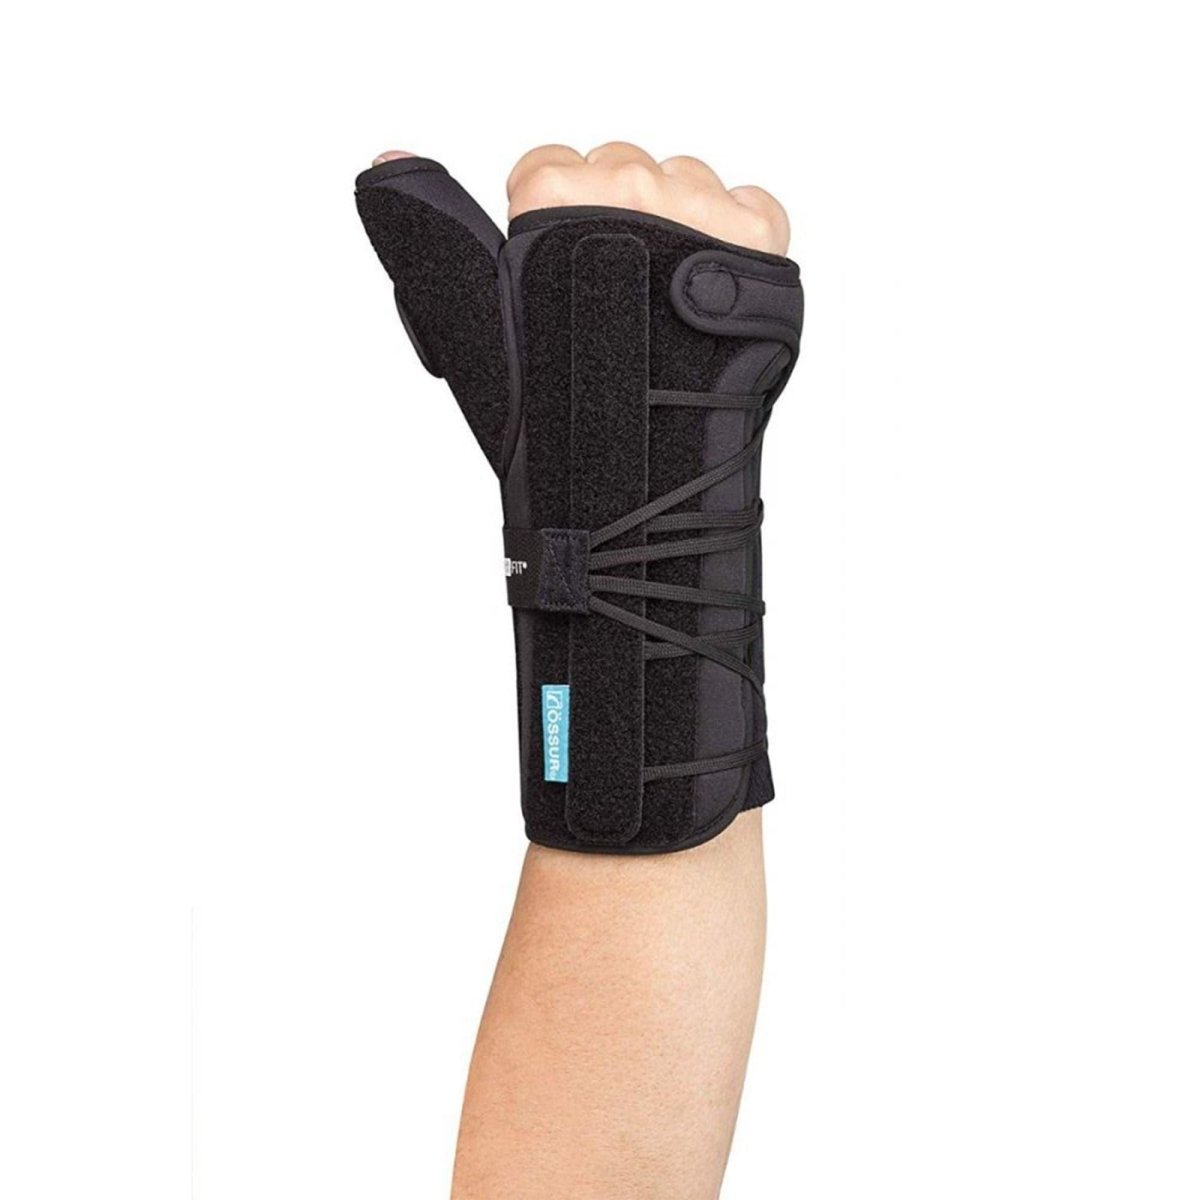 Ossur Form Fit Thumb Spica Brace - B-252603-B-253603301-Left-Pediatric3.5-5 - Brace Direct